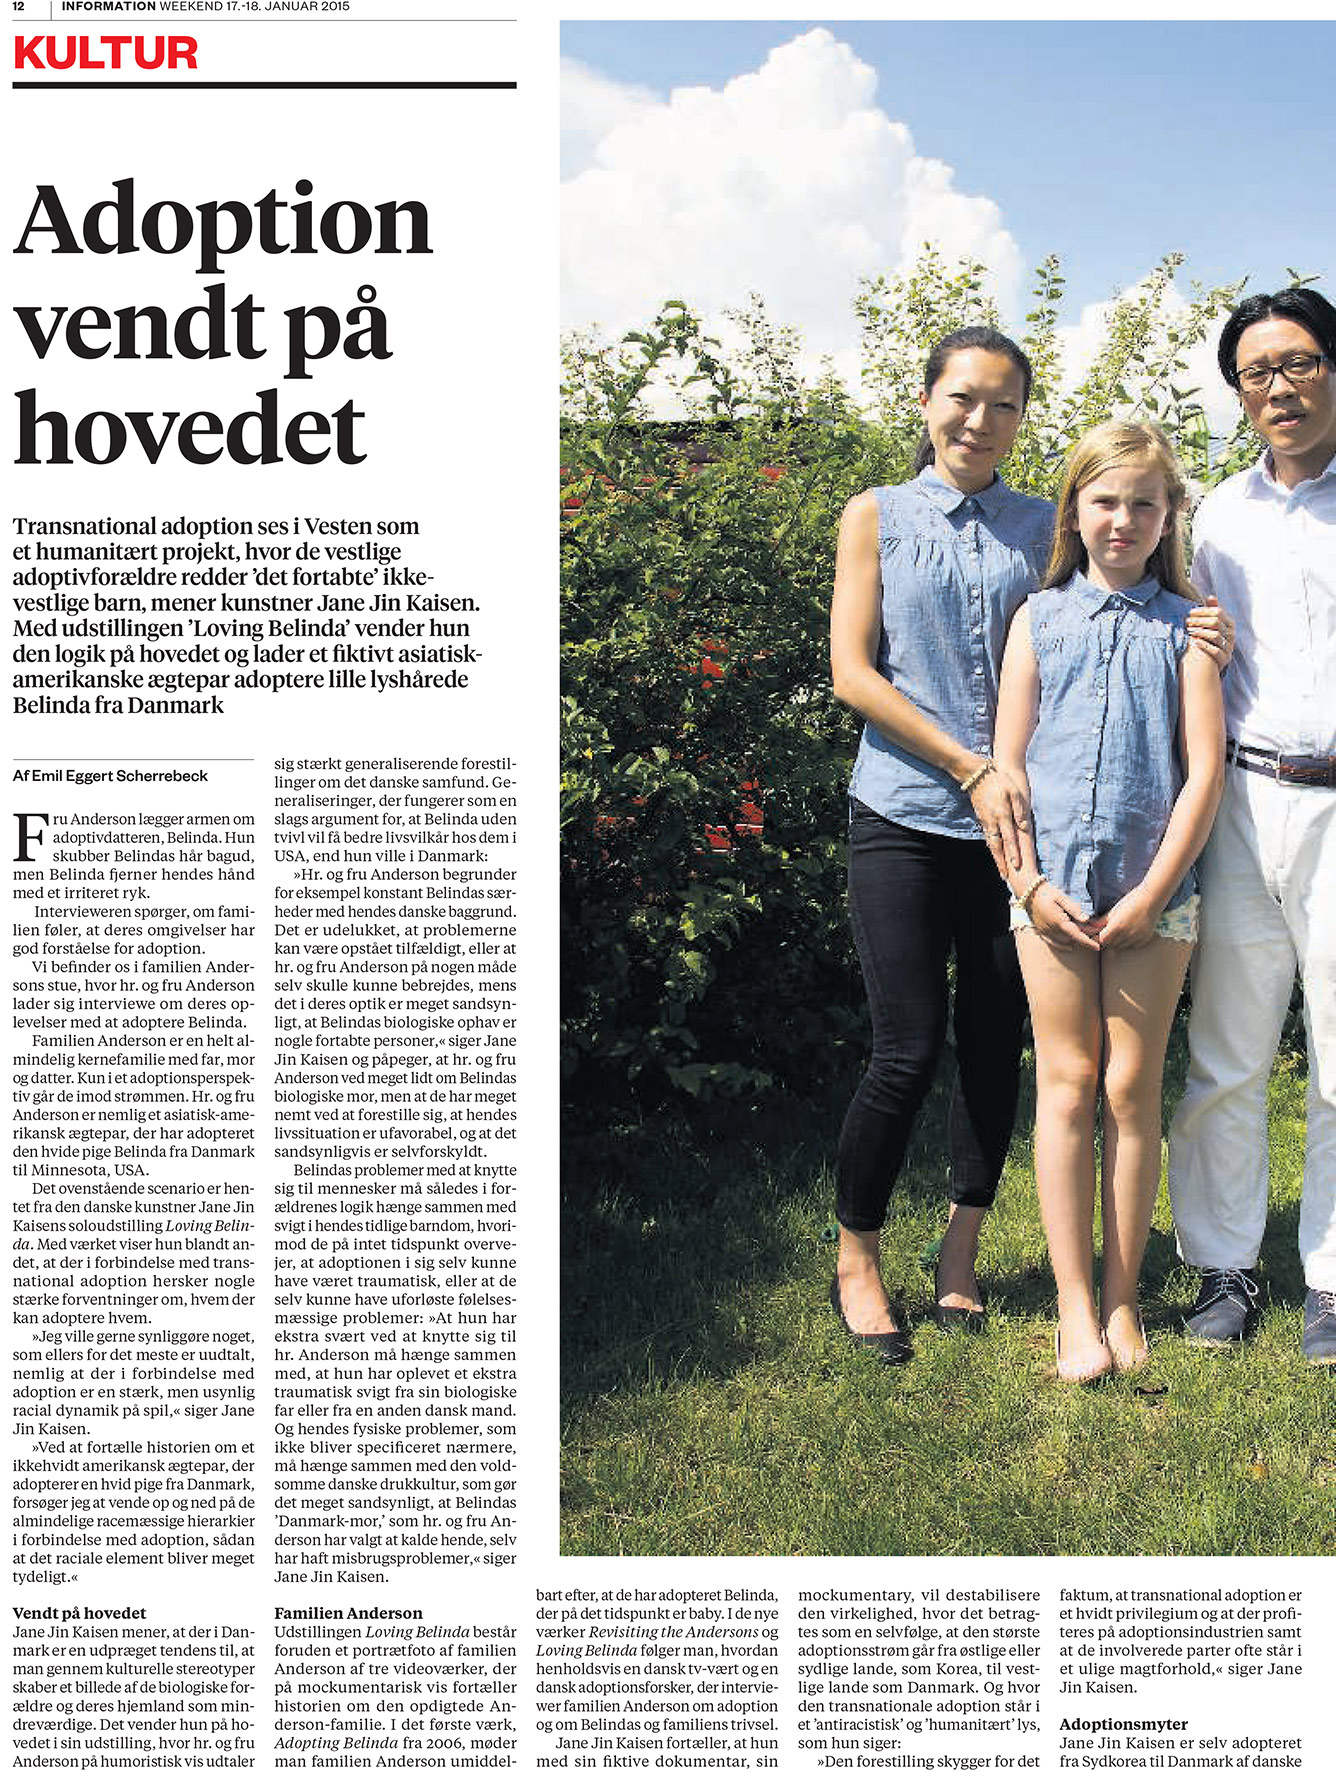  Newspaper article, Information, Denmark 